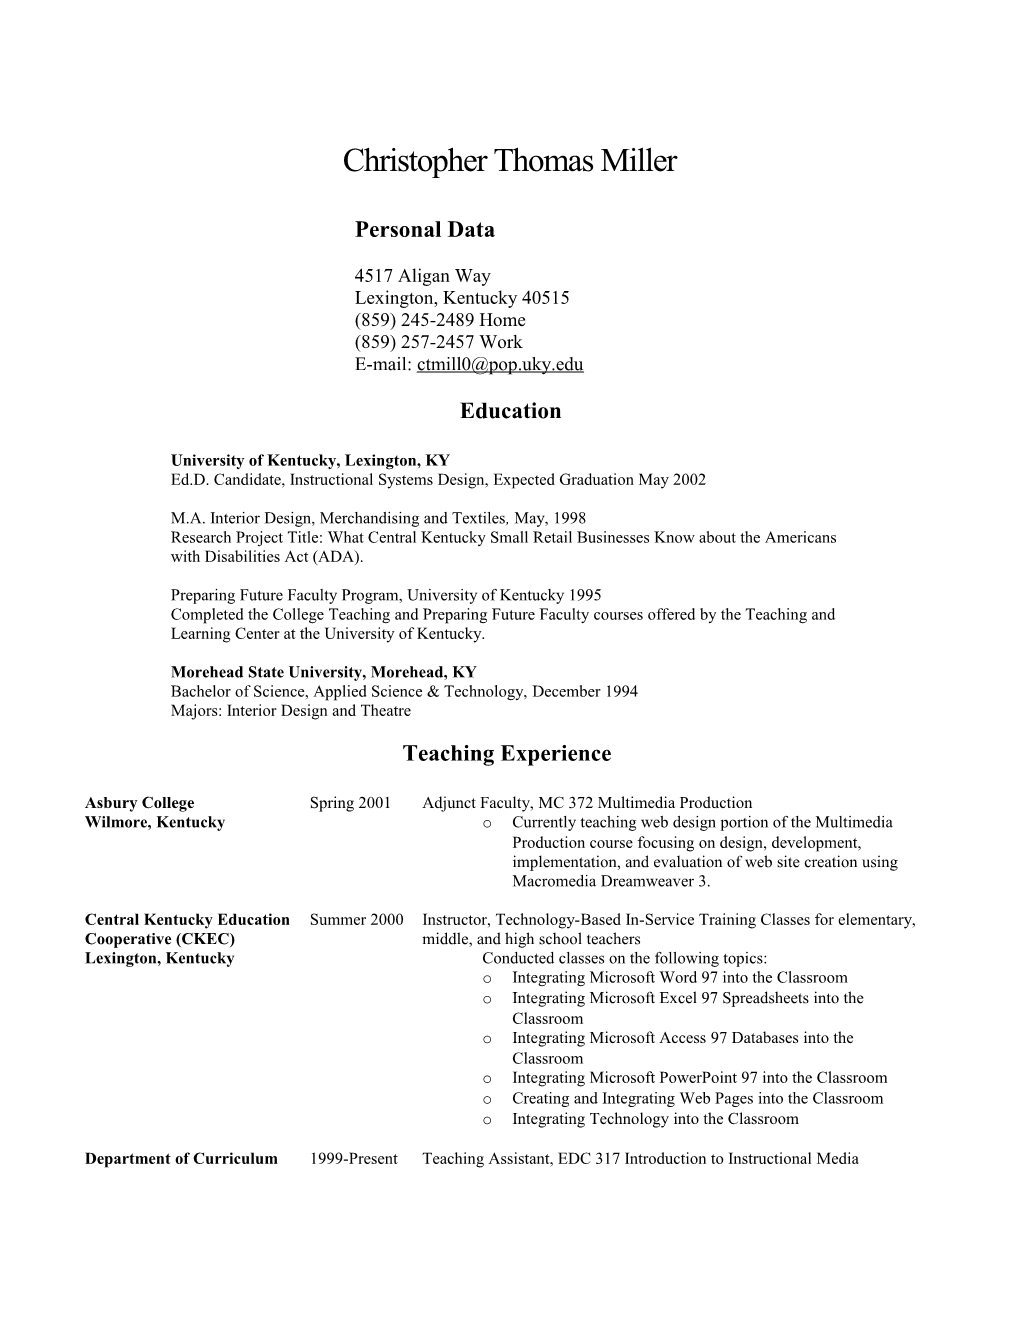 Christopher Thomas Miller